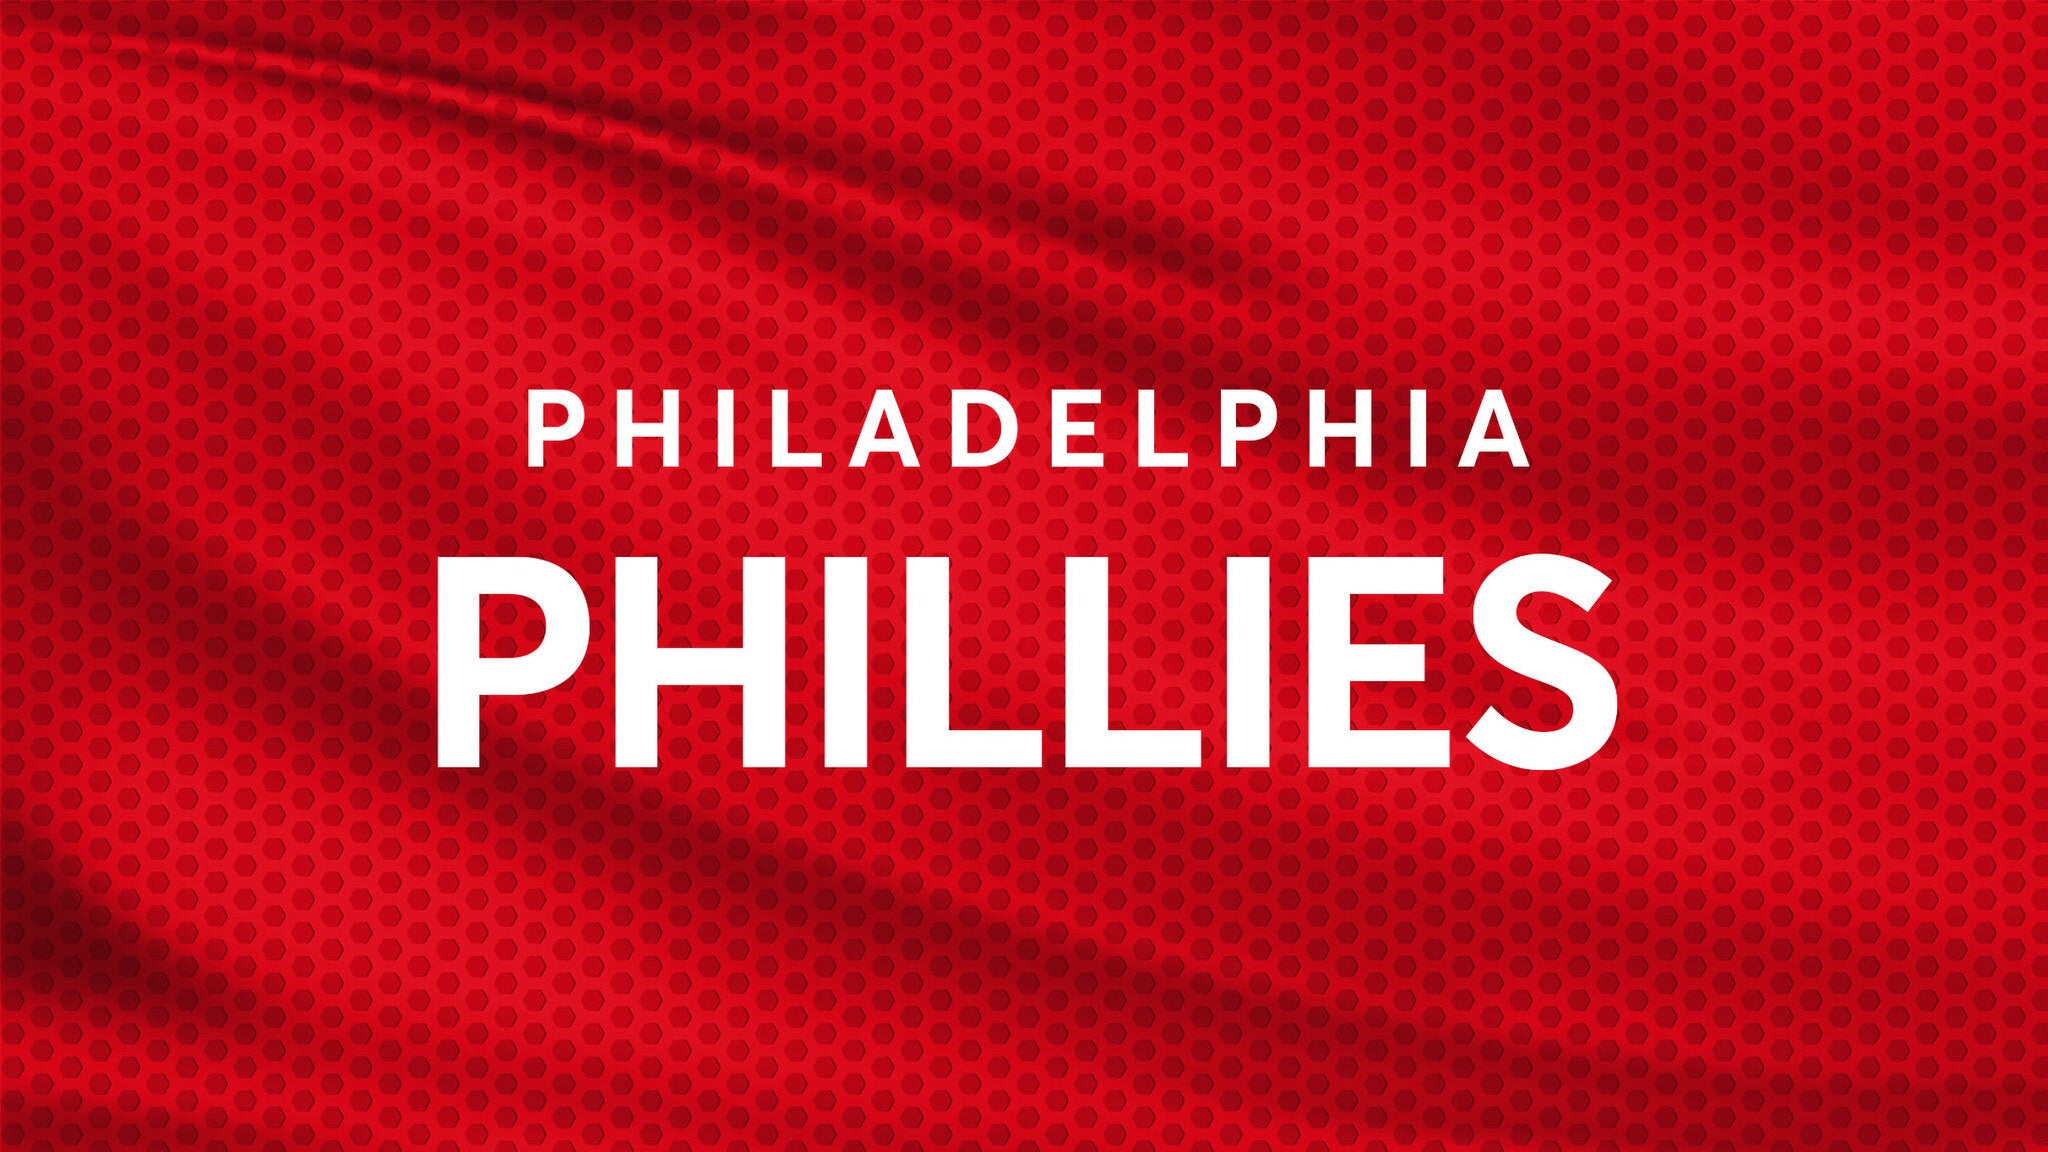 Philadelphia Phillies vs. Los Angeles Angels